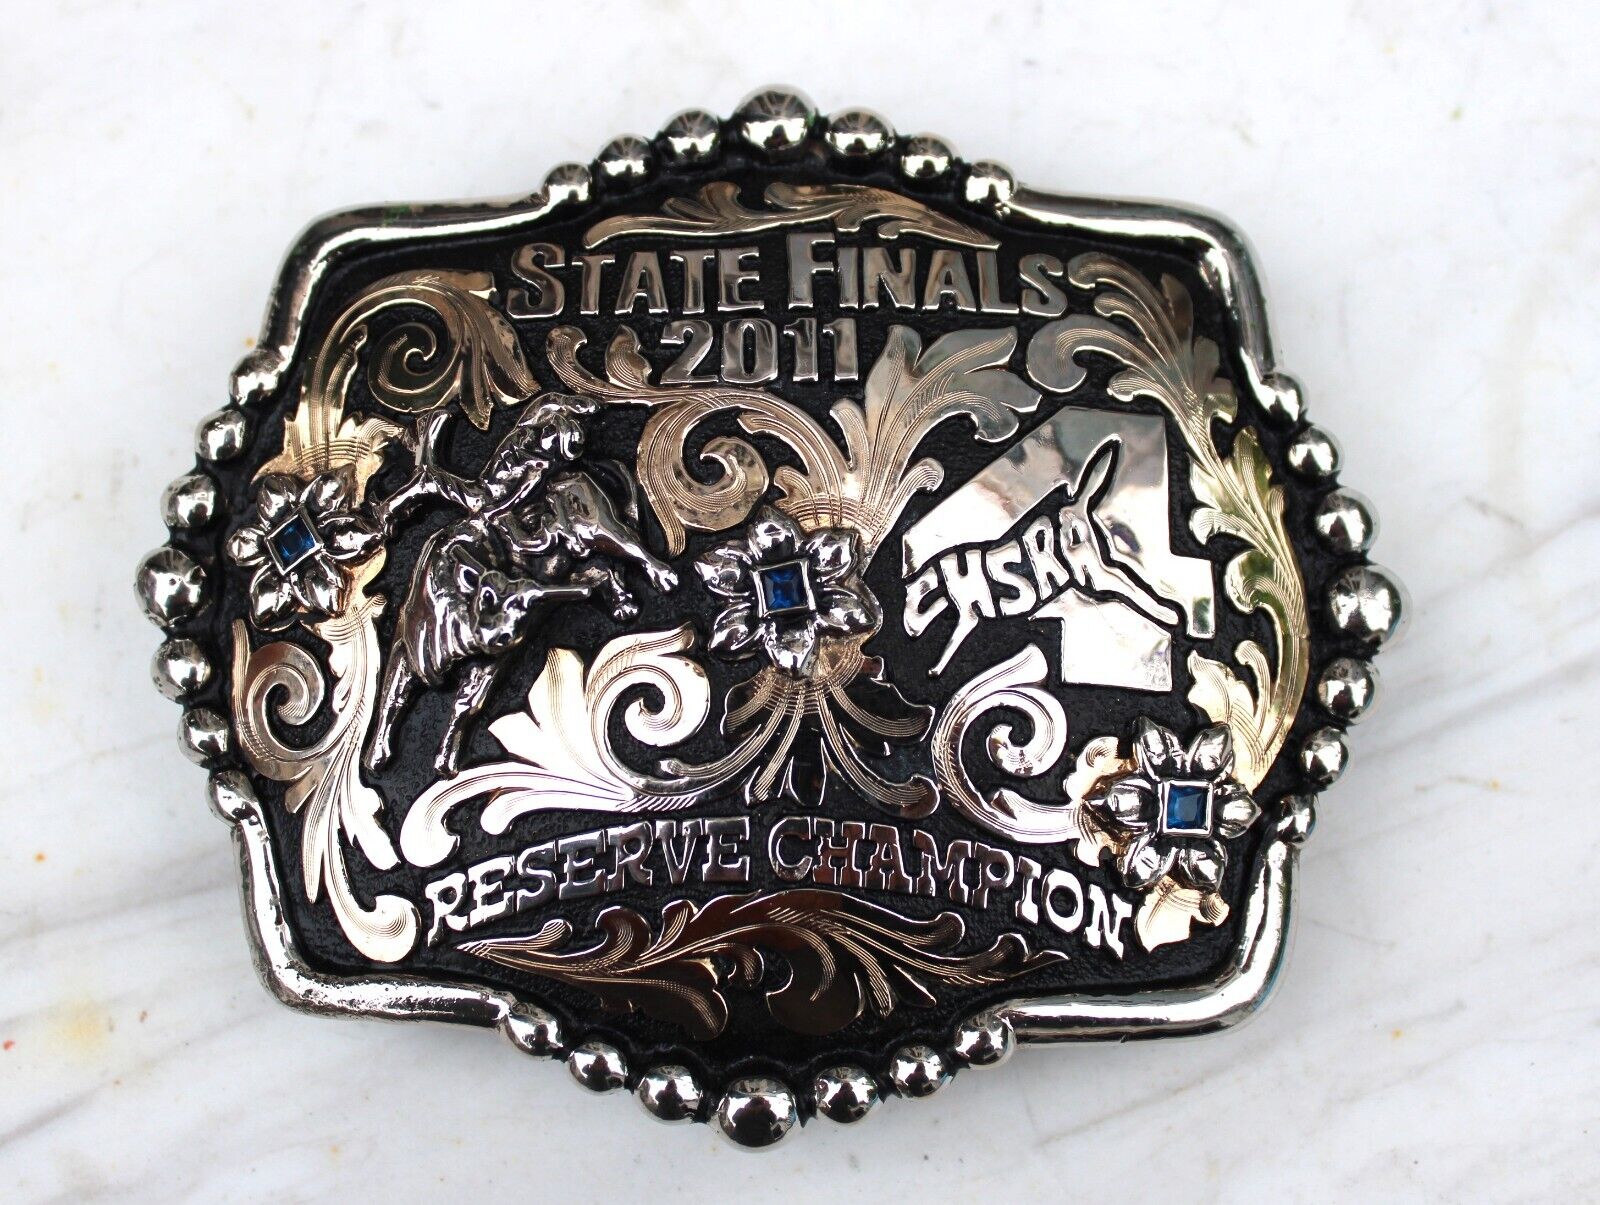 Rodeo Trophy Bob Berg Western Belt Buckle 2011 State Finals Reserve Champion